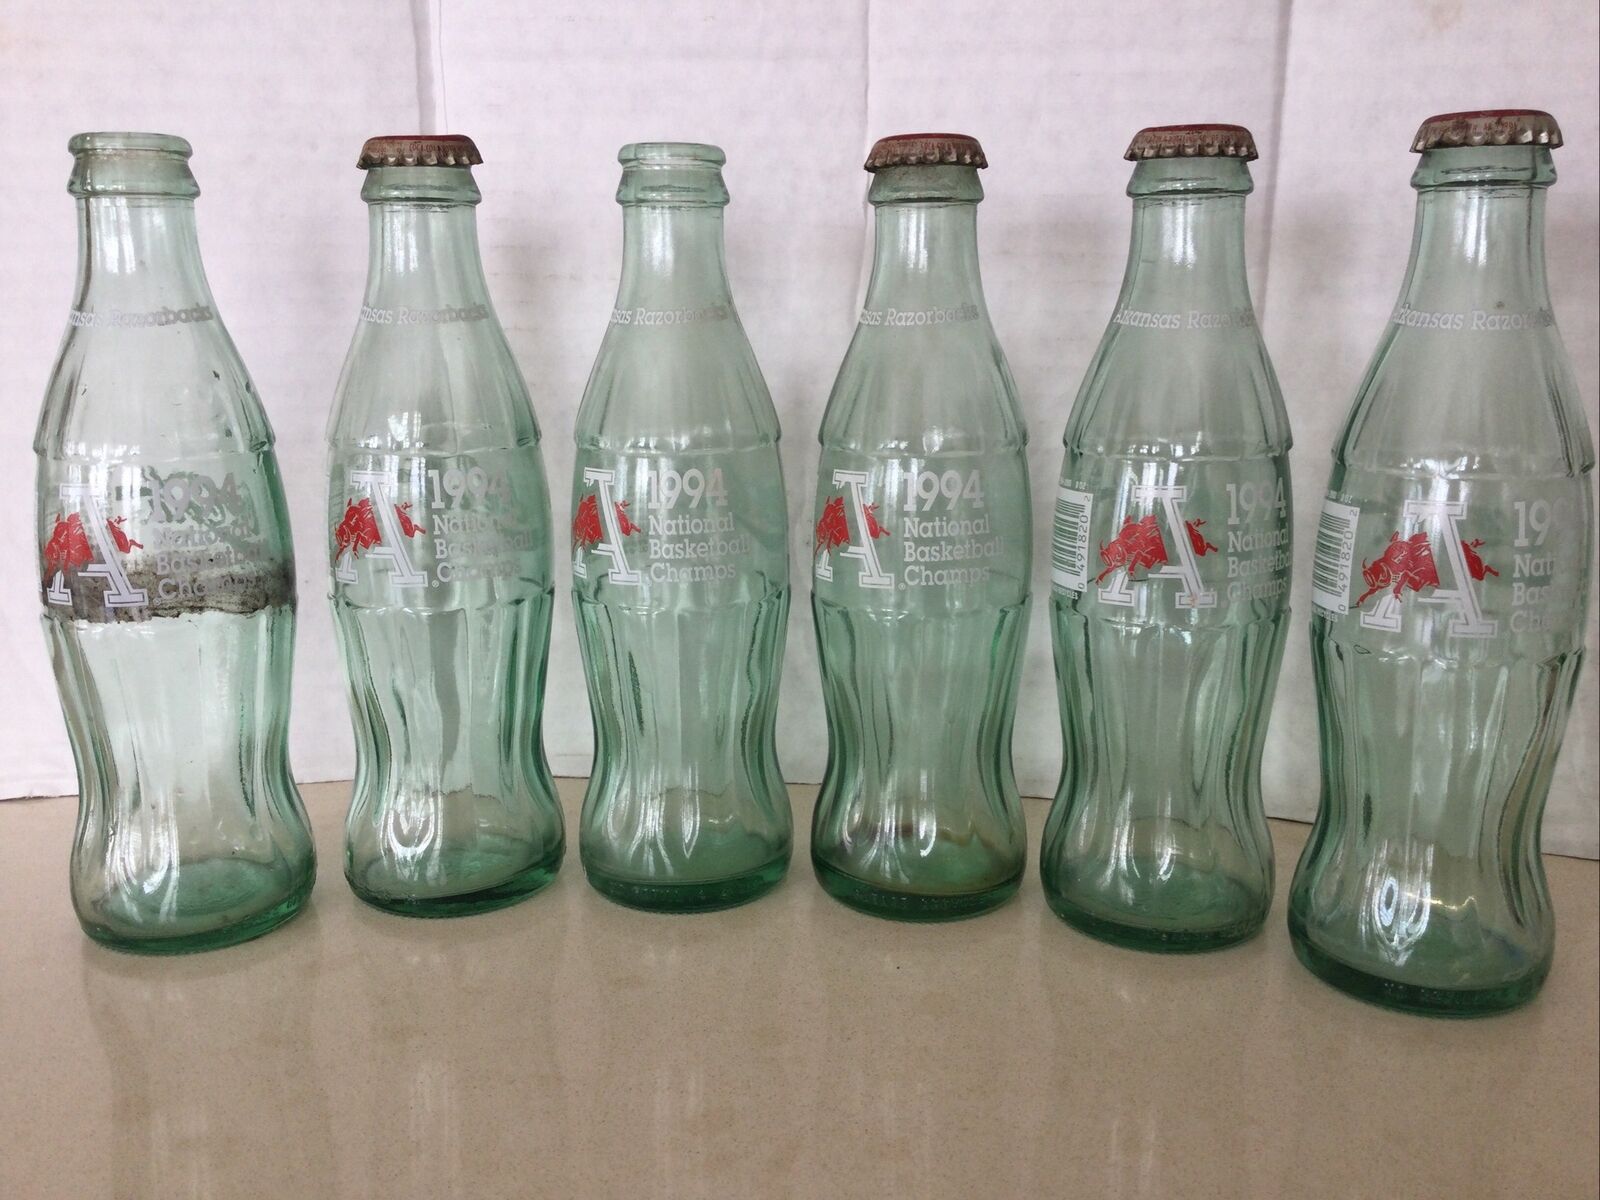 National Basketball Champs, Arkansas Razorbacks, 1994: Vintage Coca Cola Bottles